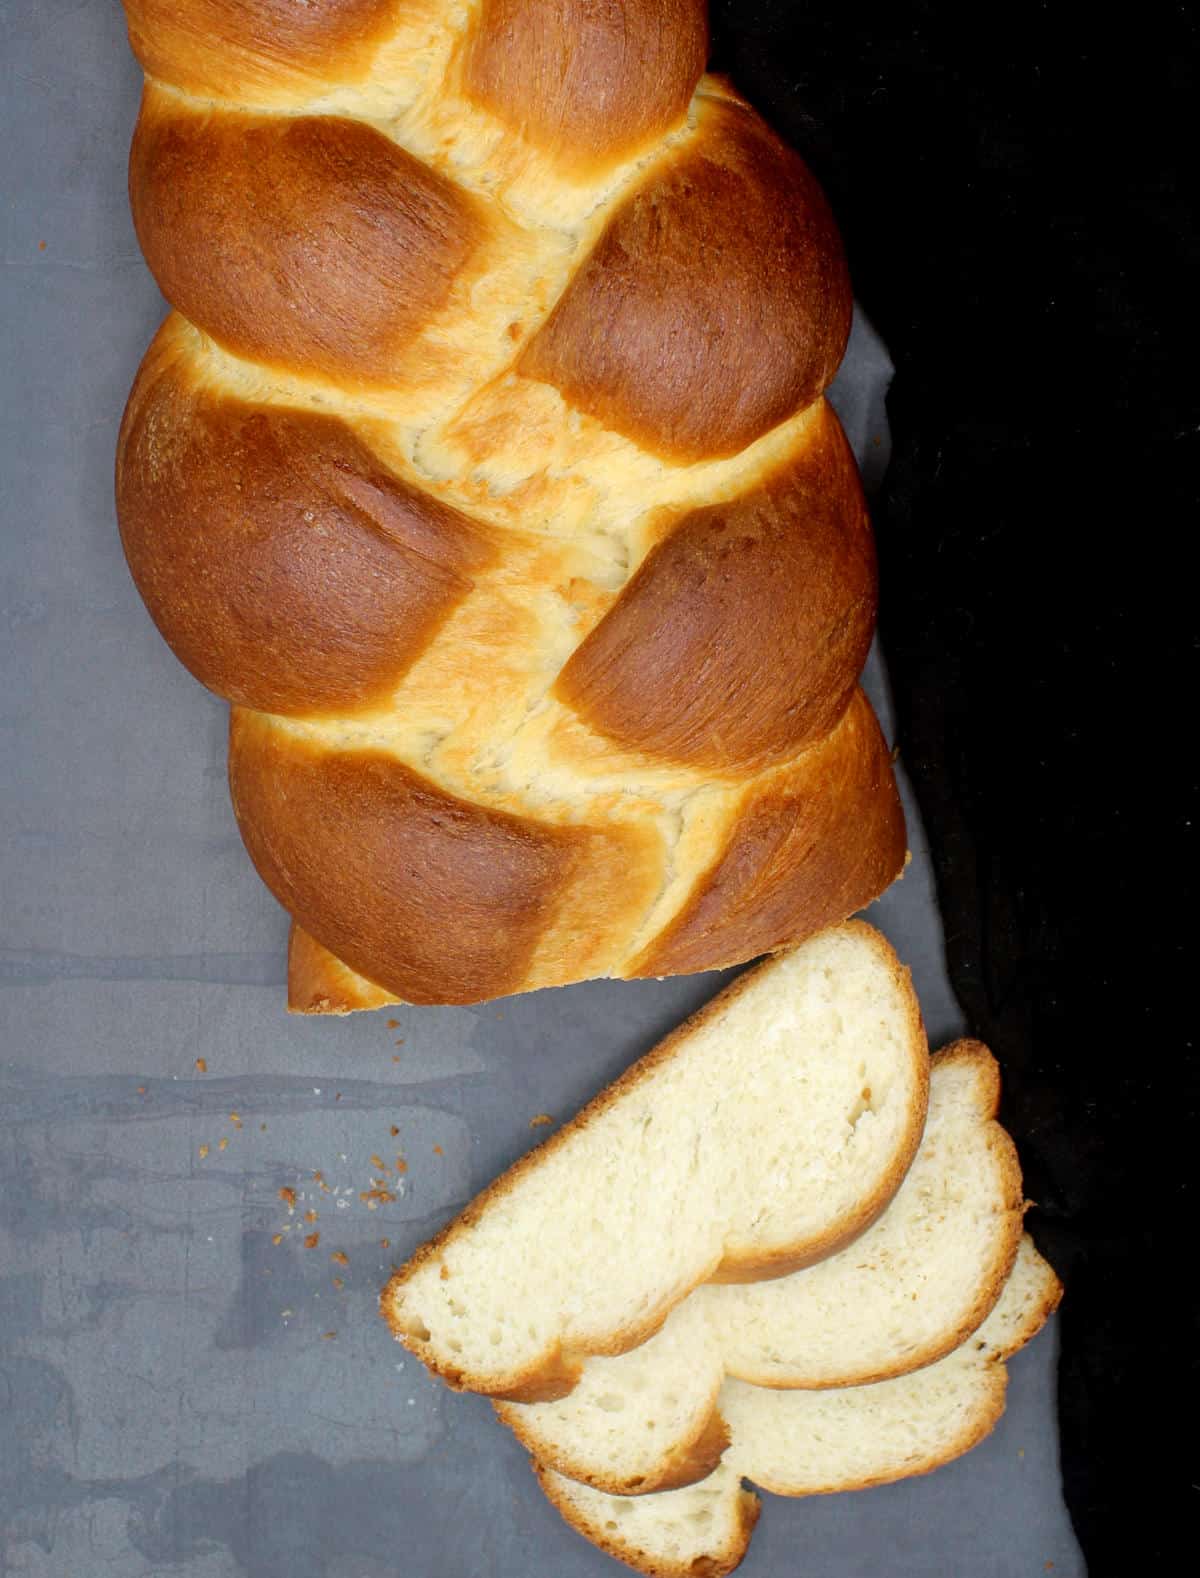 Sliced vegan challah bread on gray background.